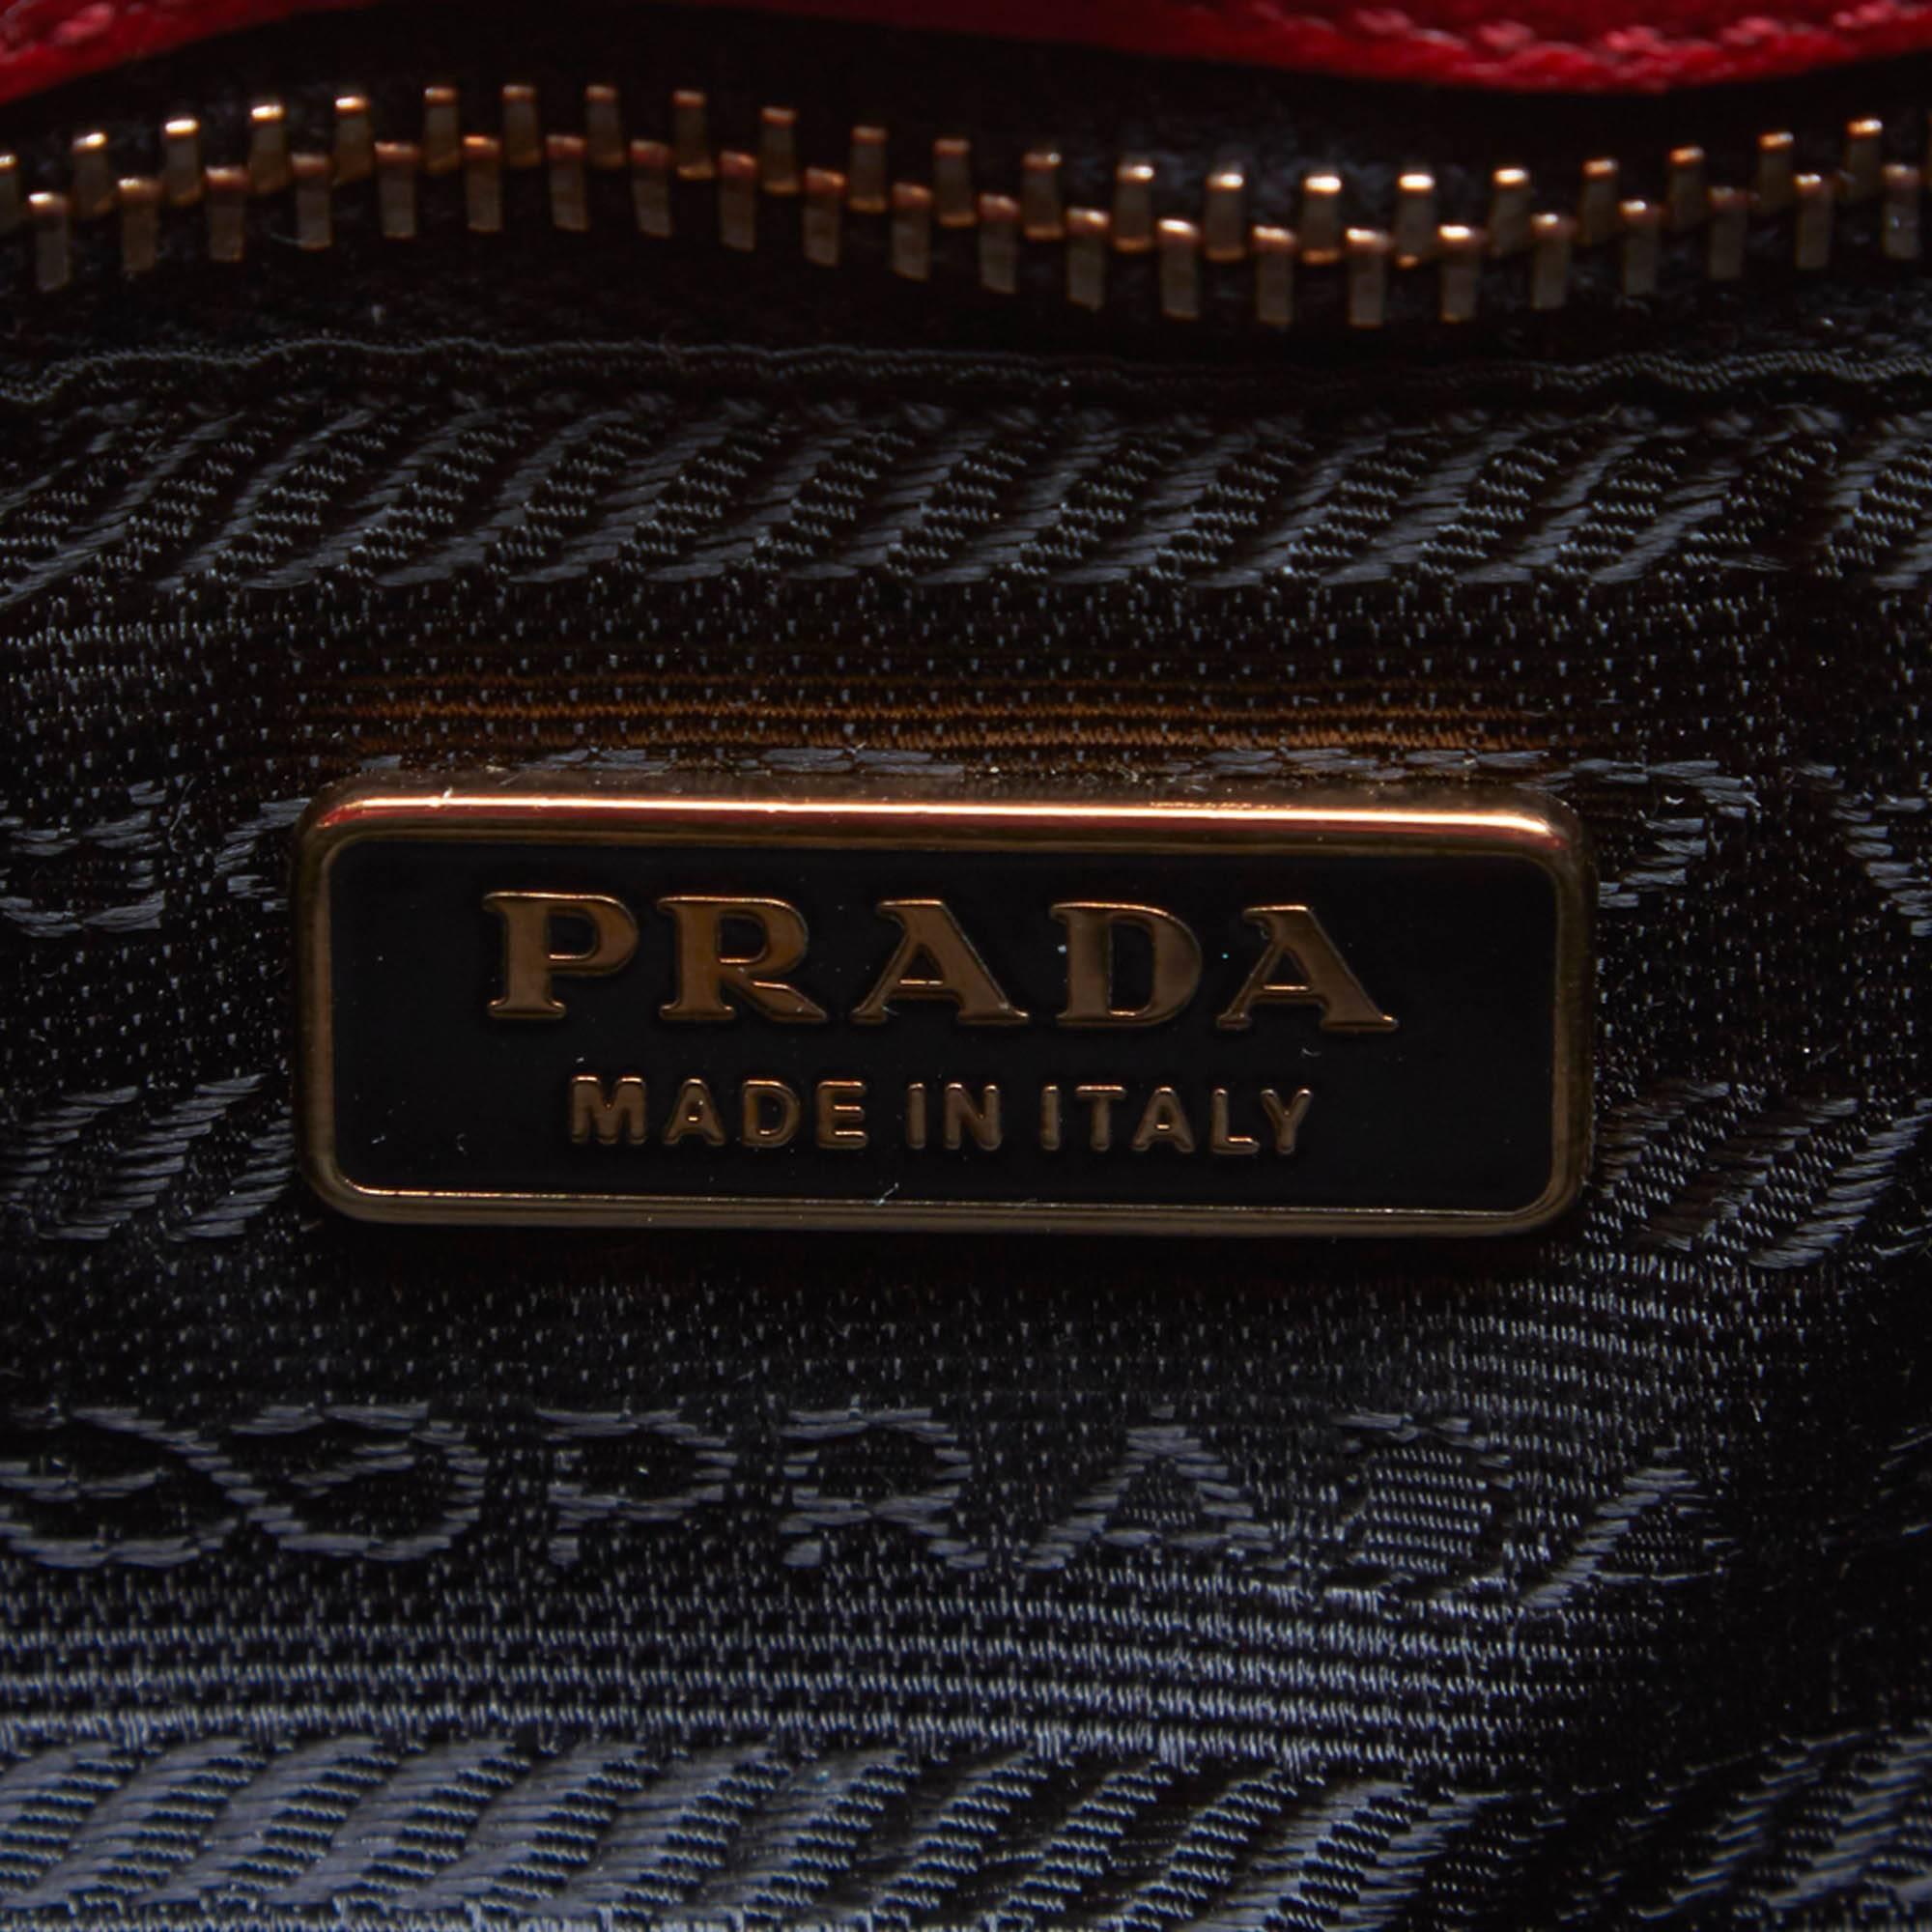 Prada Red Calf Leather 18 Carat Gold-Toned Eyelet Handbag 1